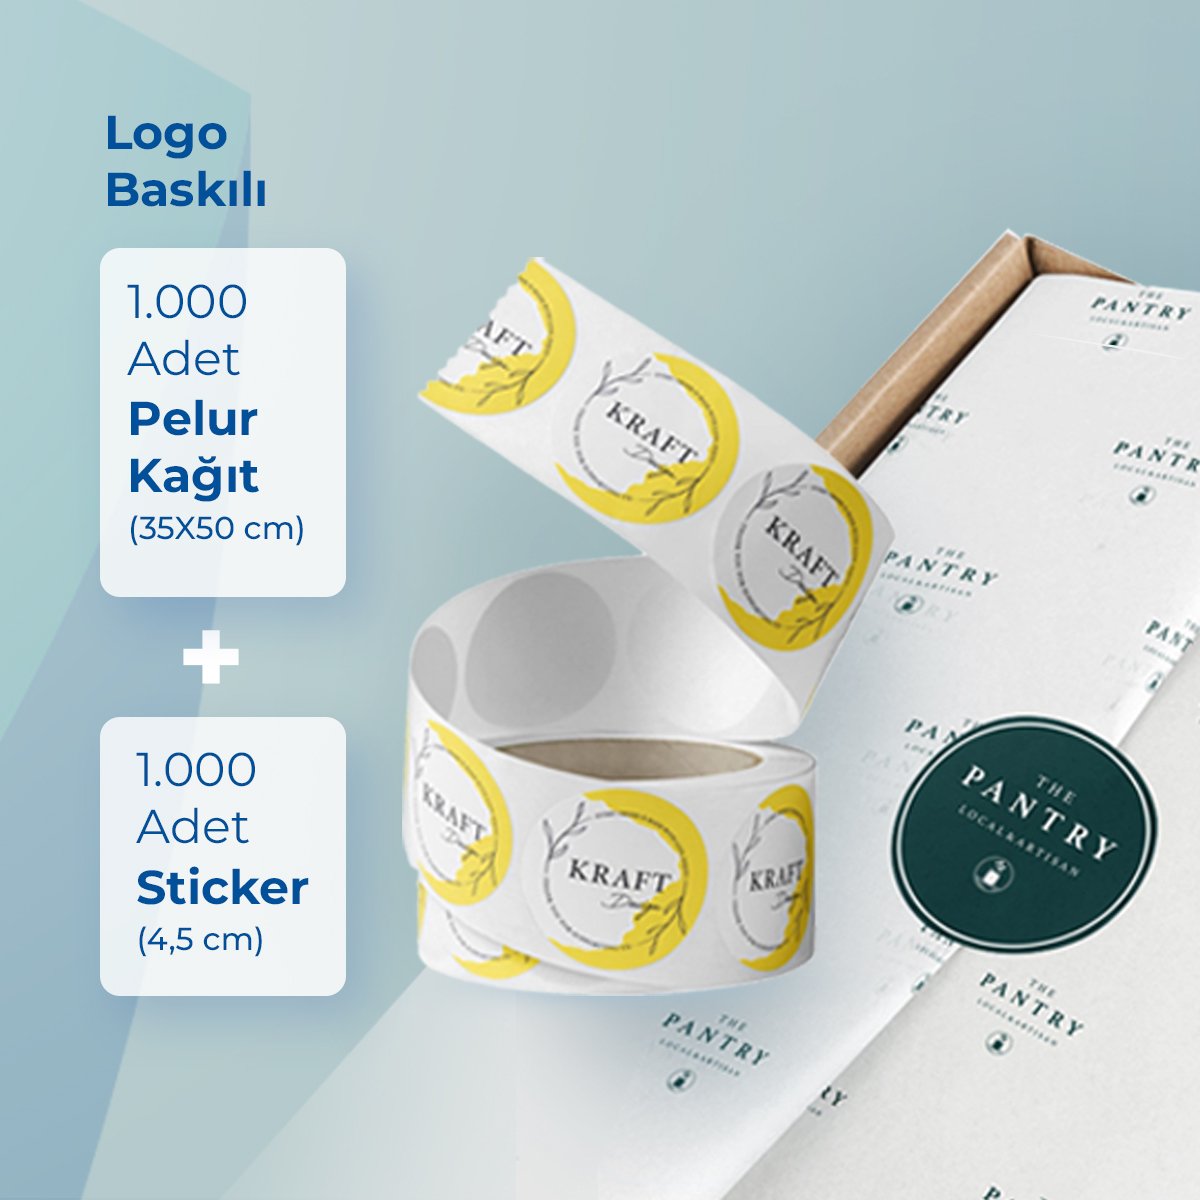 Logo Baskılı Pelur Kağıt(1000 adet) + Kuşe Etiket(1000 adet)